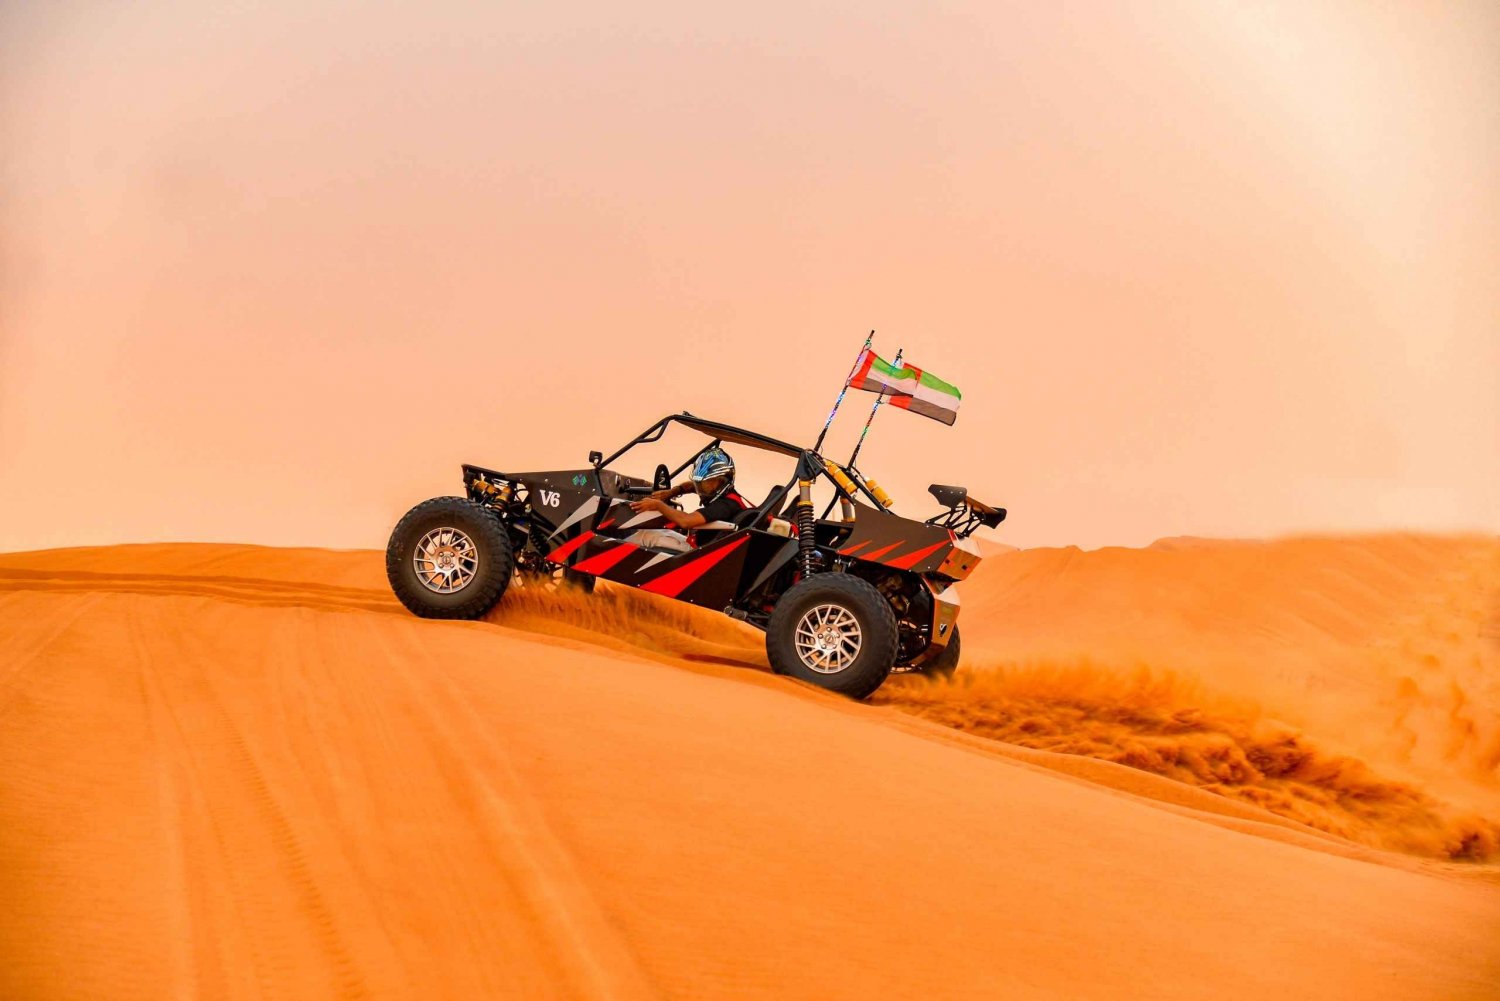 Aventura de buggy nas dunas de 3000 cc + Safári no deserto - experiência particular